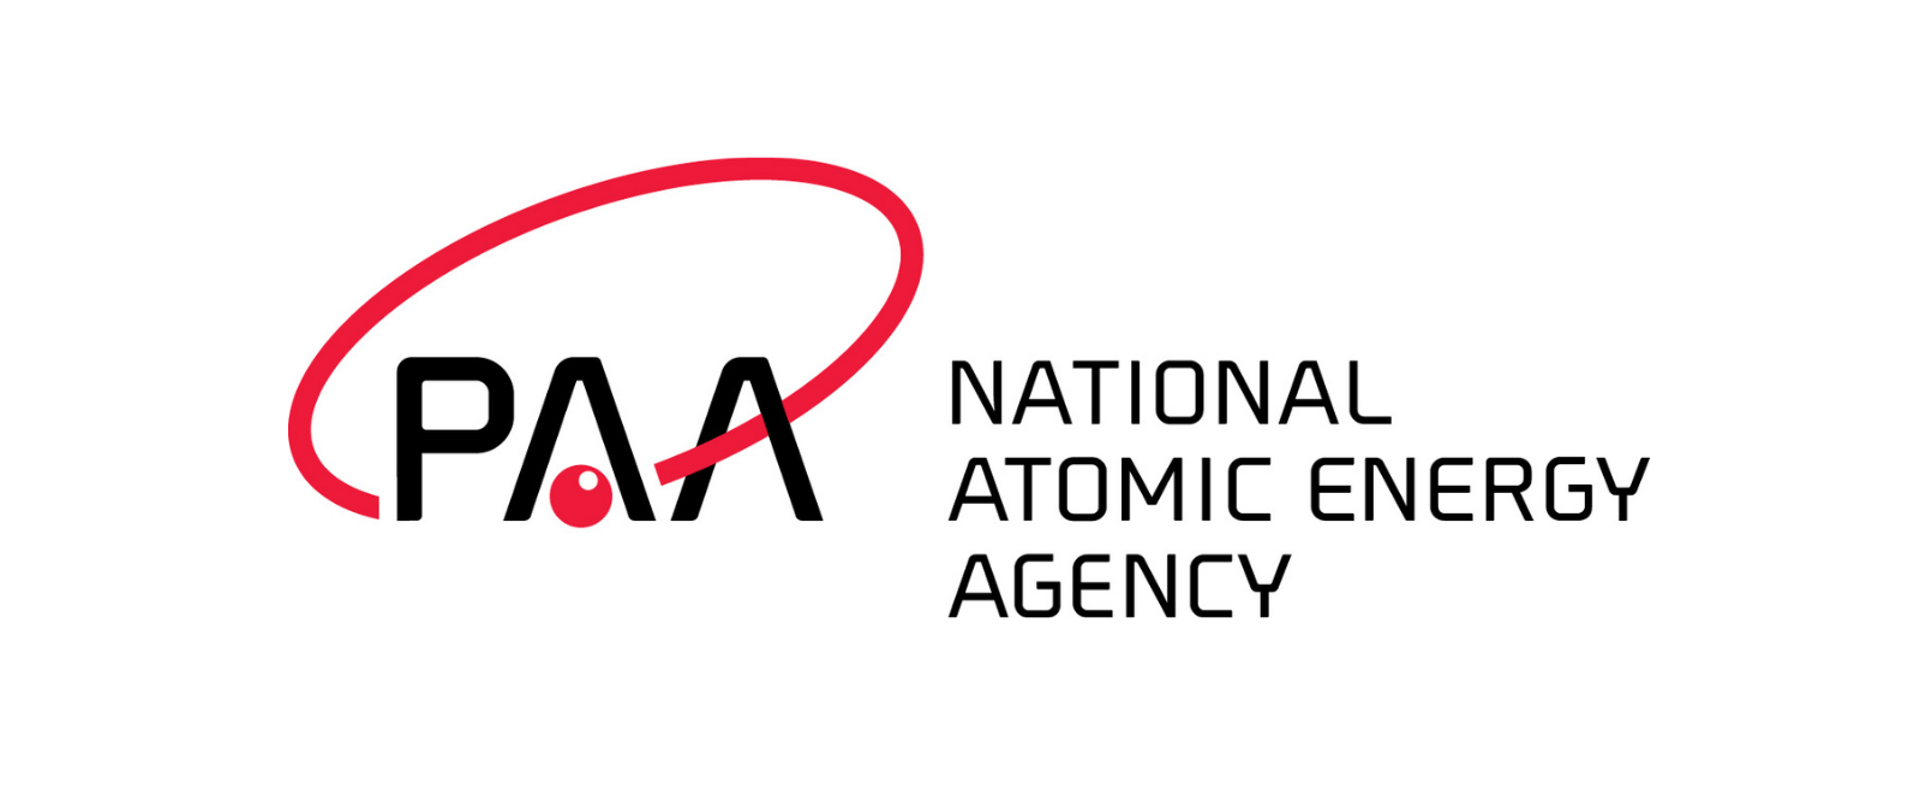 Logotype of the National Atomic Energy Agency